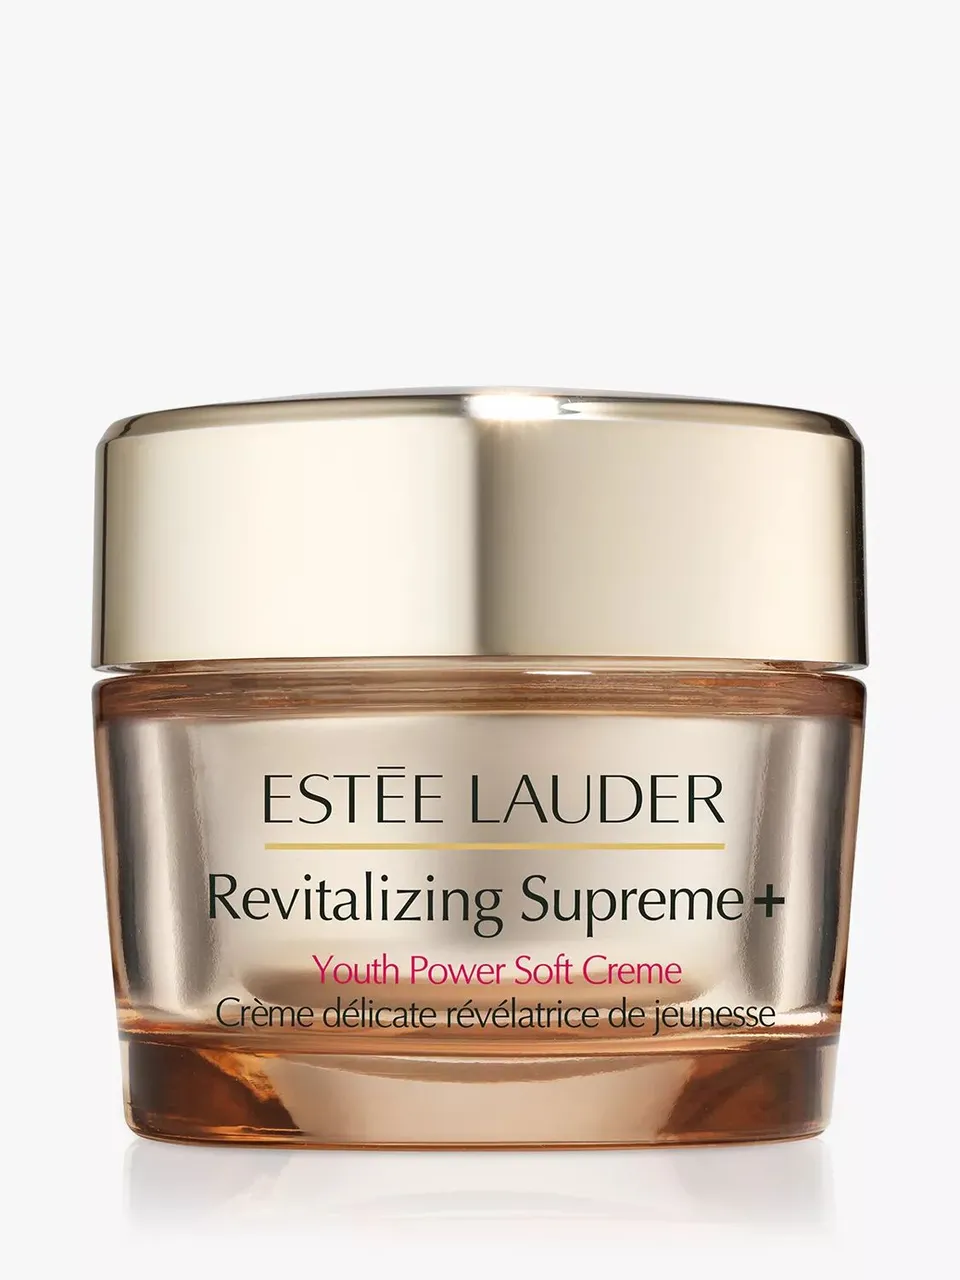 EstÃ©e Lauder Revitalizing Supreme+ Youth Power Soft Creme Moisturiser, 50ml - Unisex - Size: 50ml